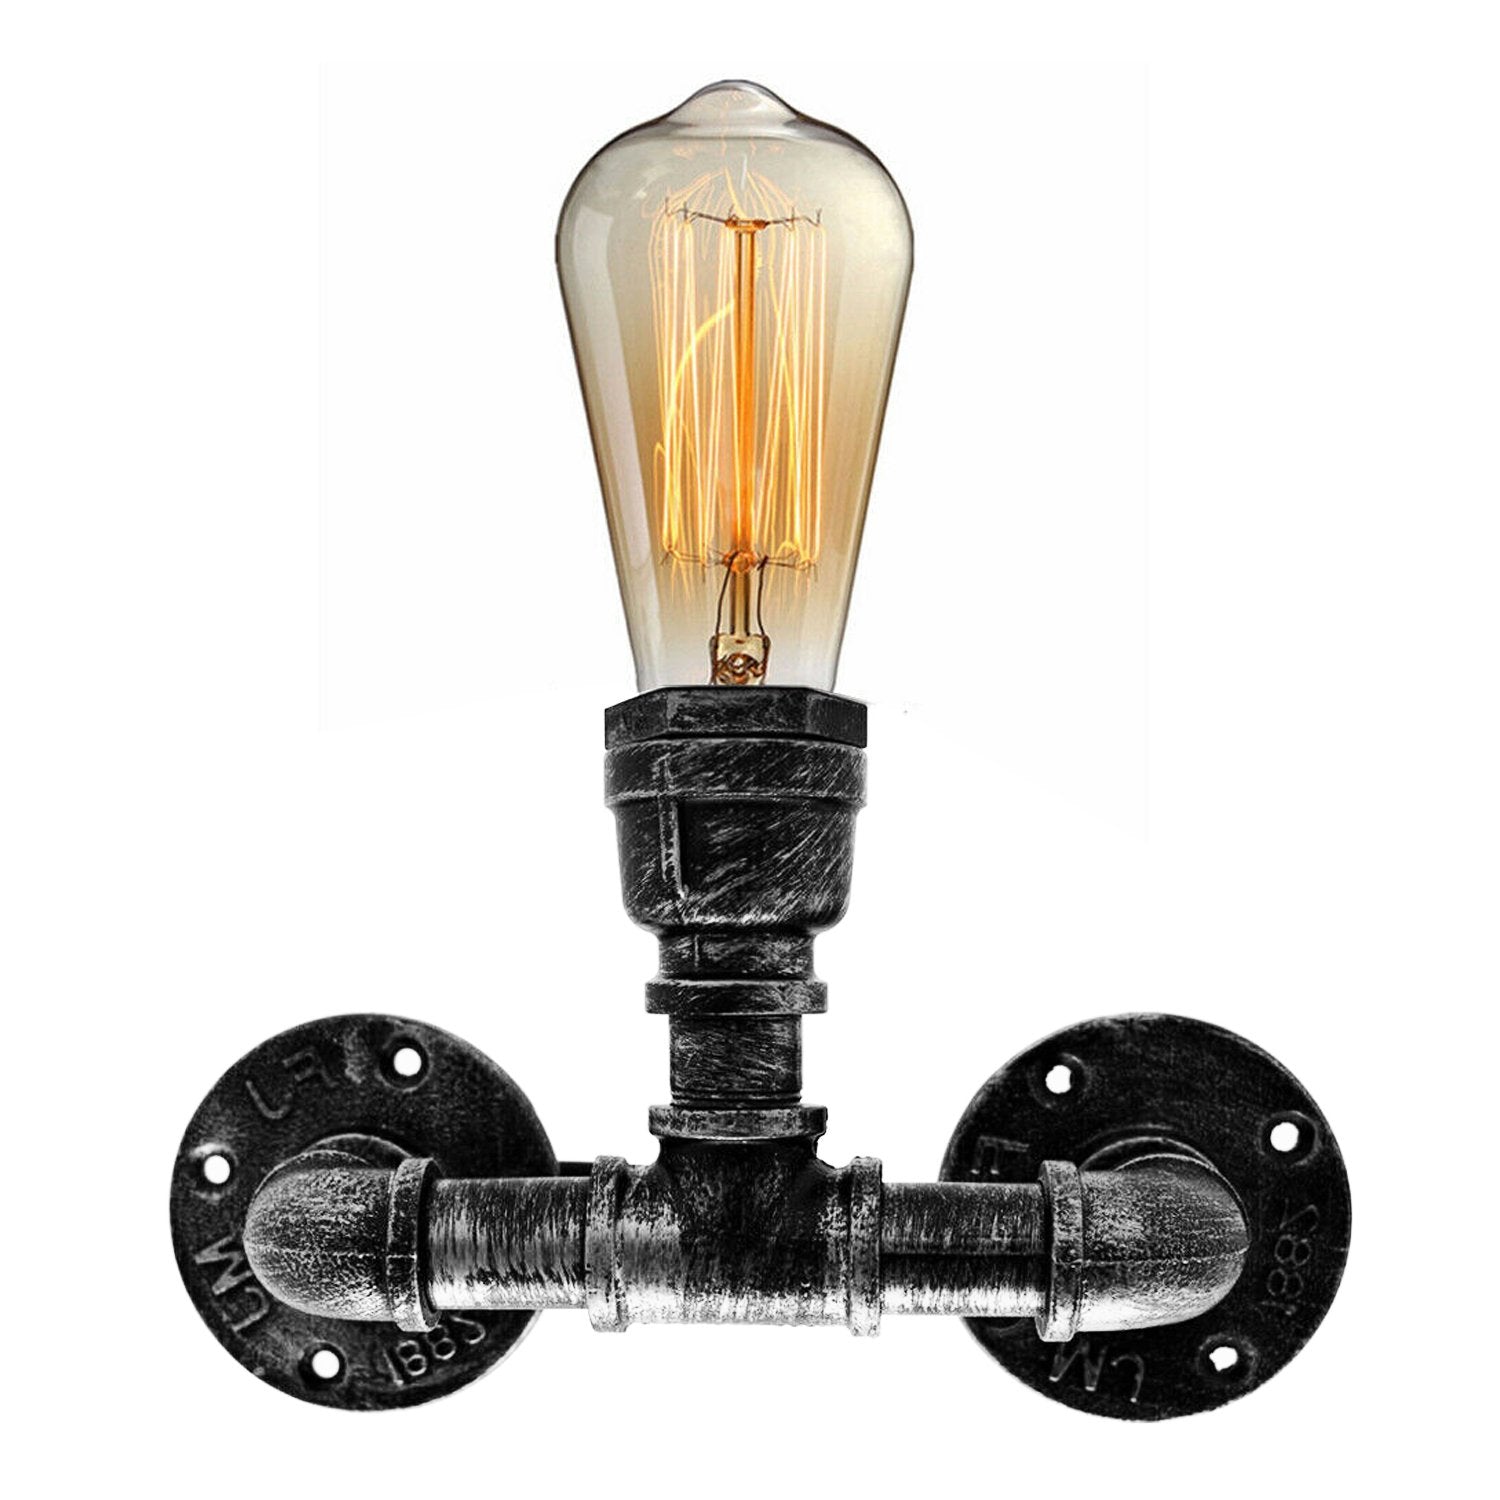 Vintage Waterpipe Steampunk lighting Wall Sconce-Black e27 lamp holder